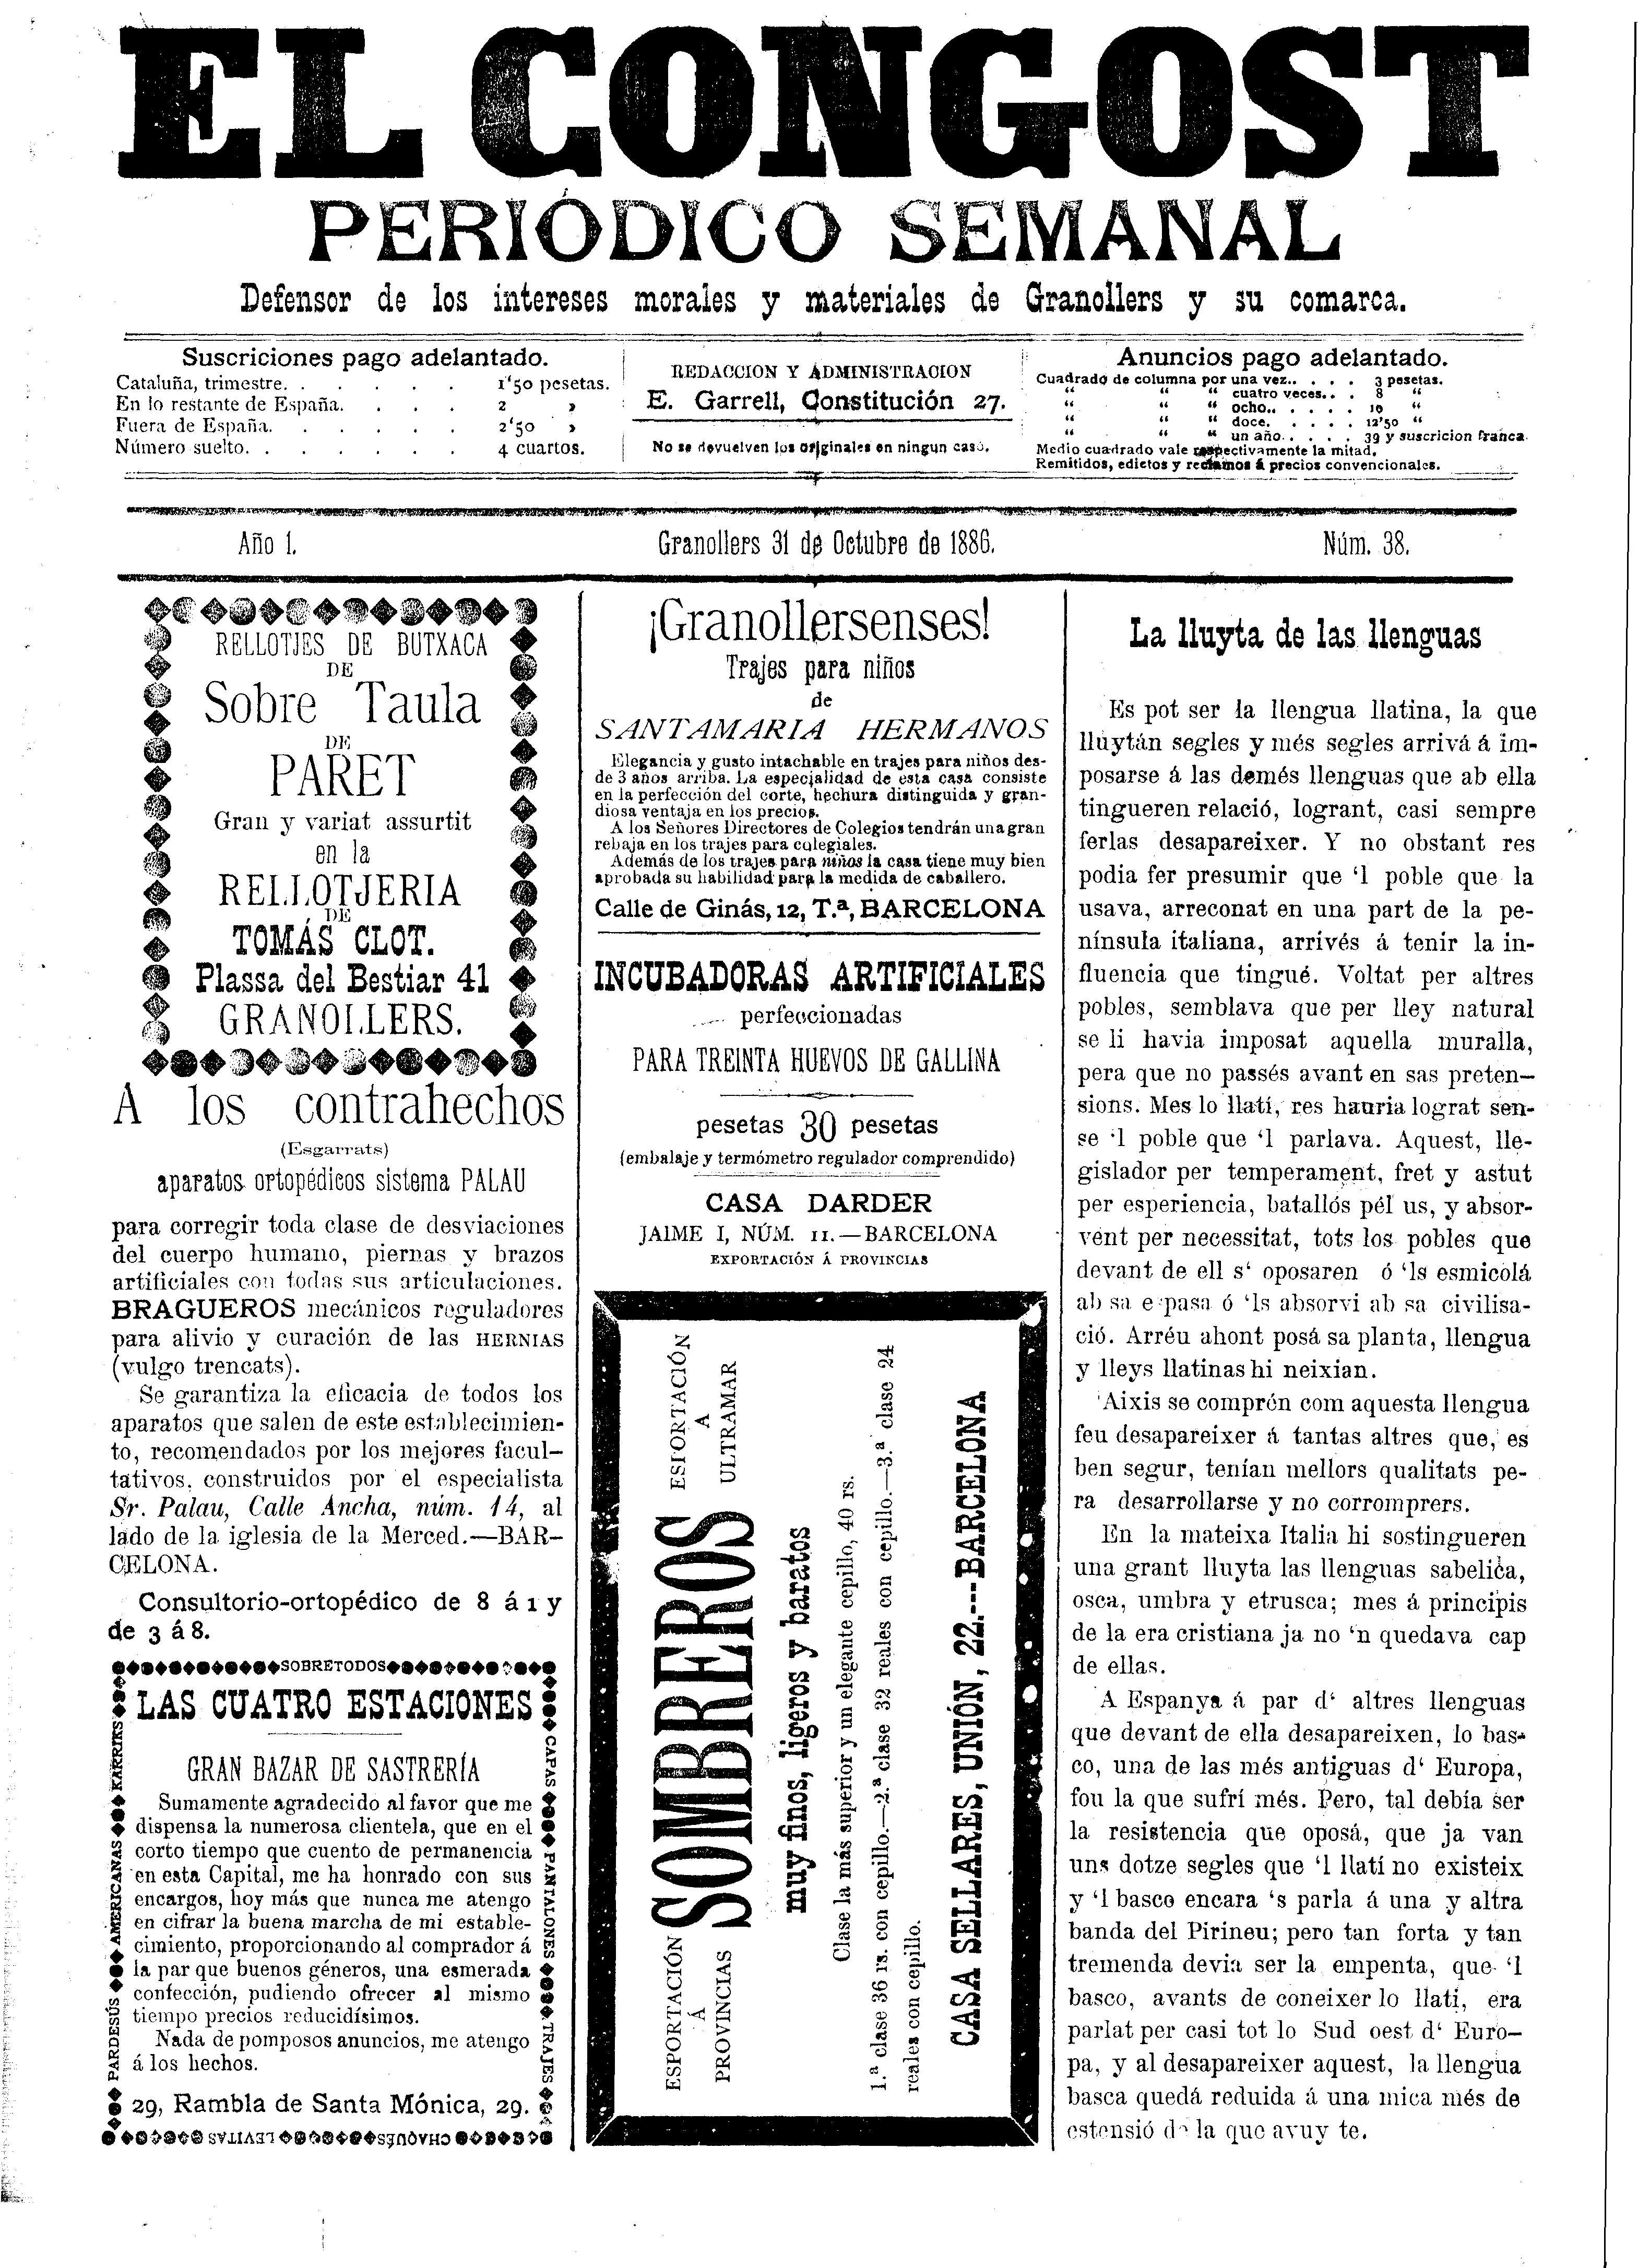 El Congost, 31/10/1886 [Ejemplar]